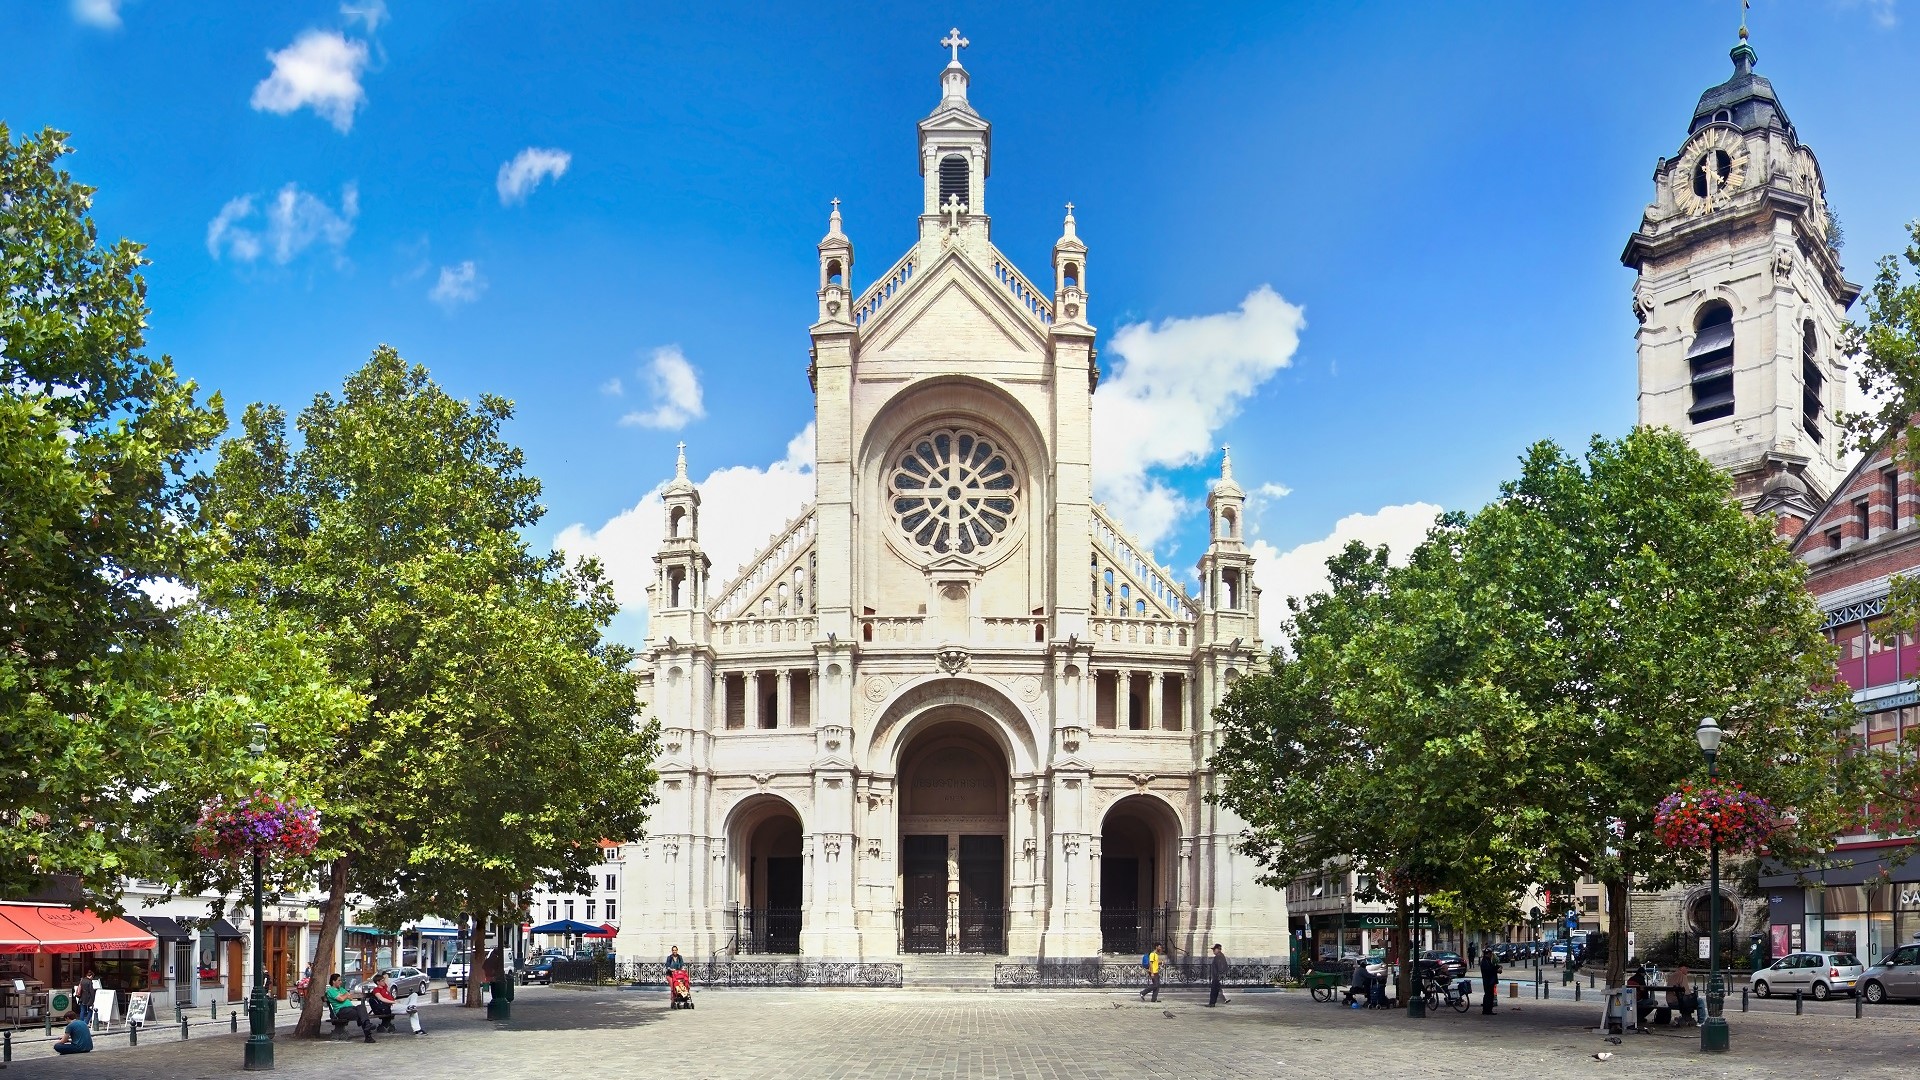 Ste-Catherine church in Brussels